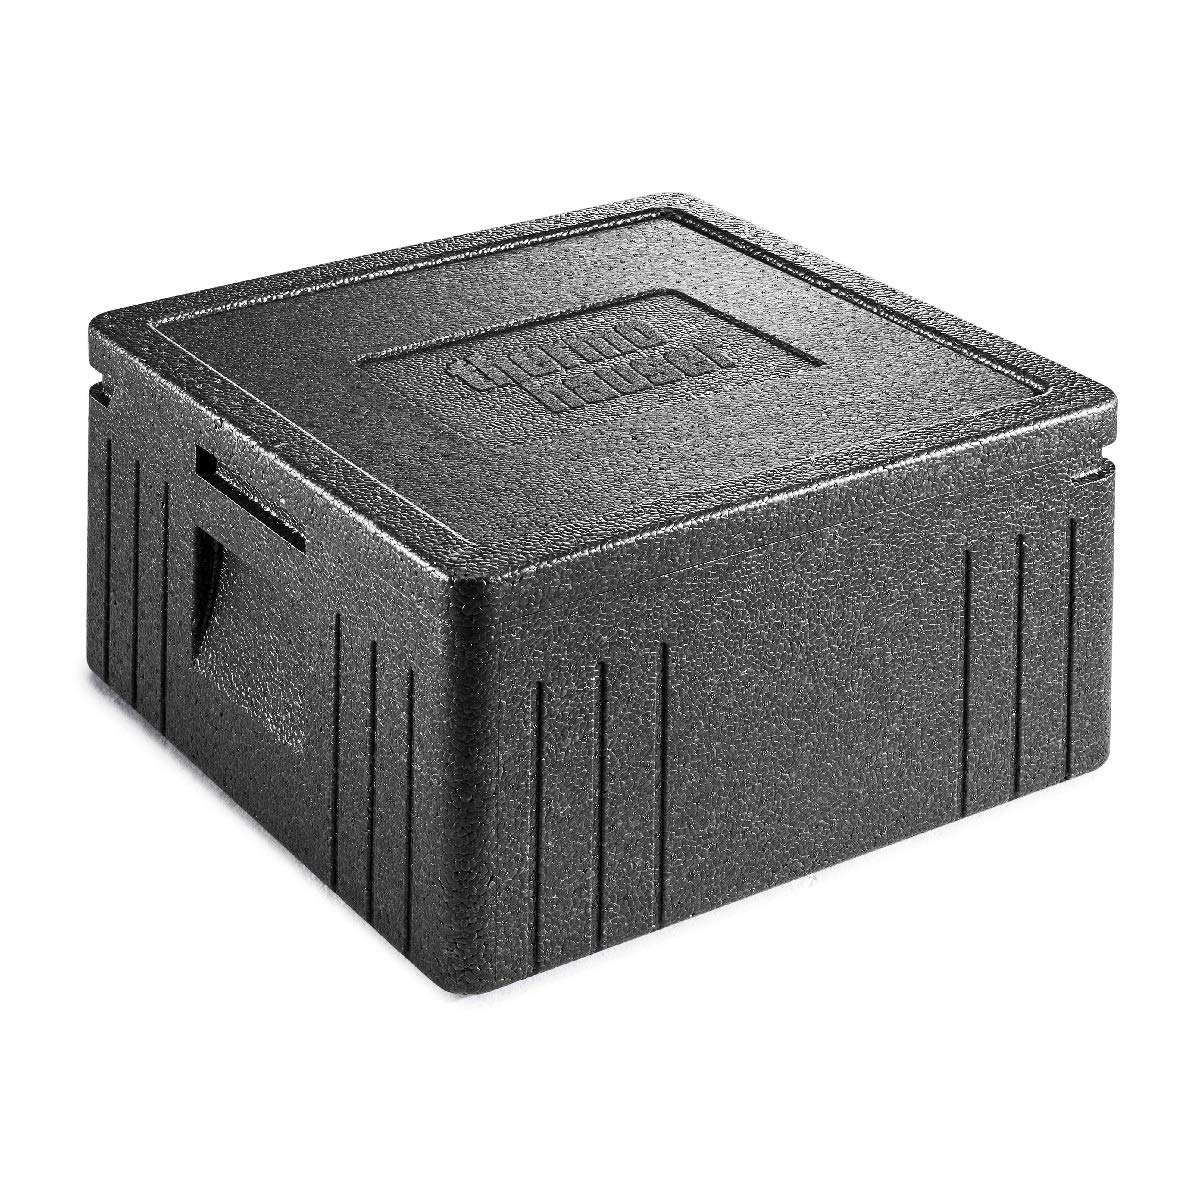  Styroporbox/Thermobox - 75,0 Liter - 79,0 x 59,0 x 36,0  cm/Wandstärke 6 cm - Styrobox  Review Analysis